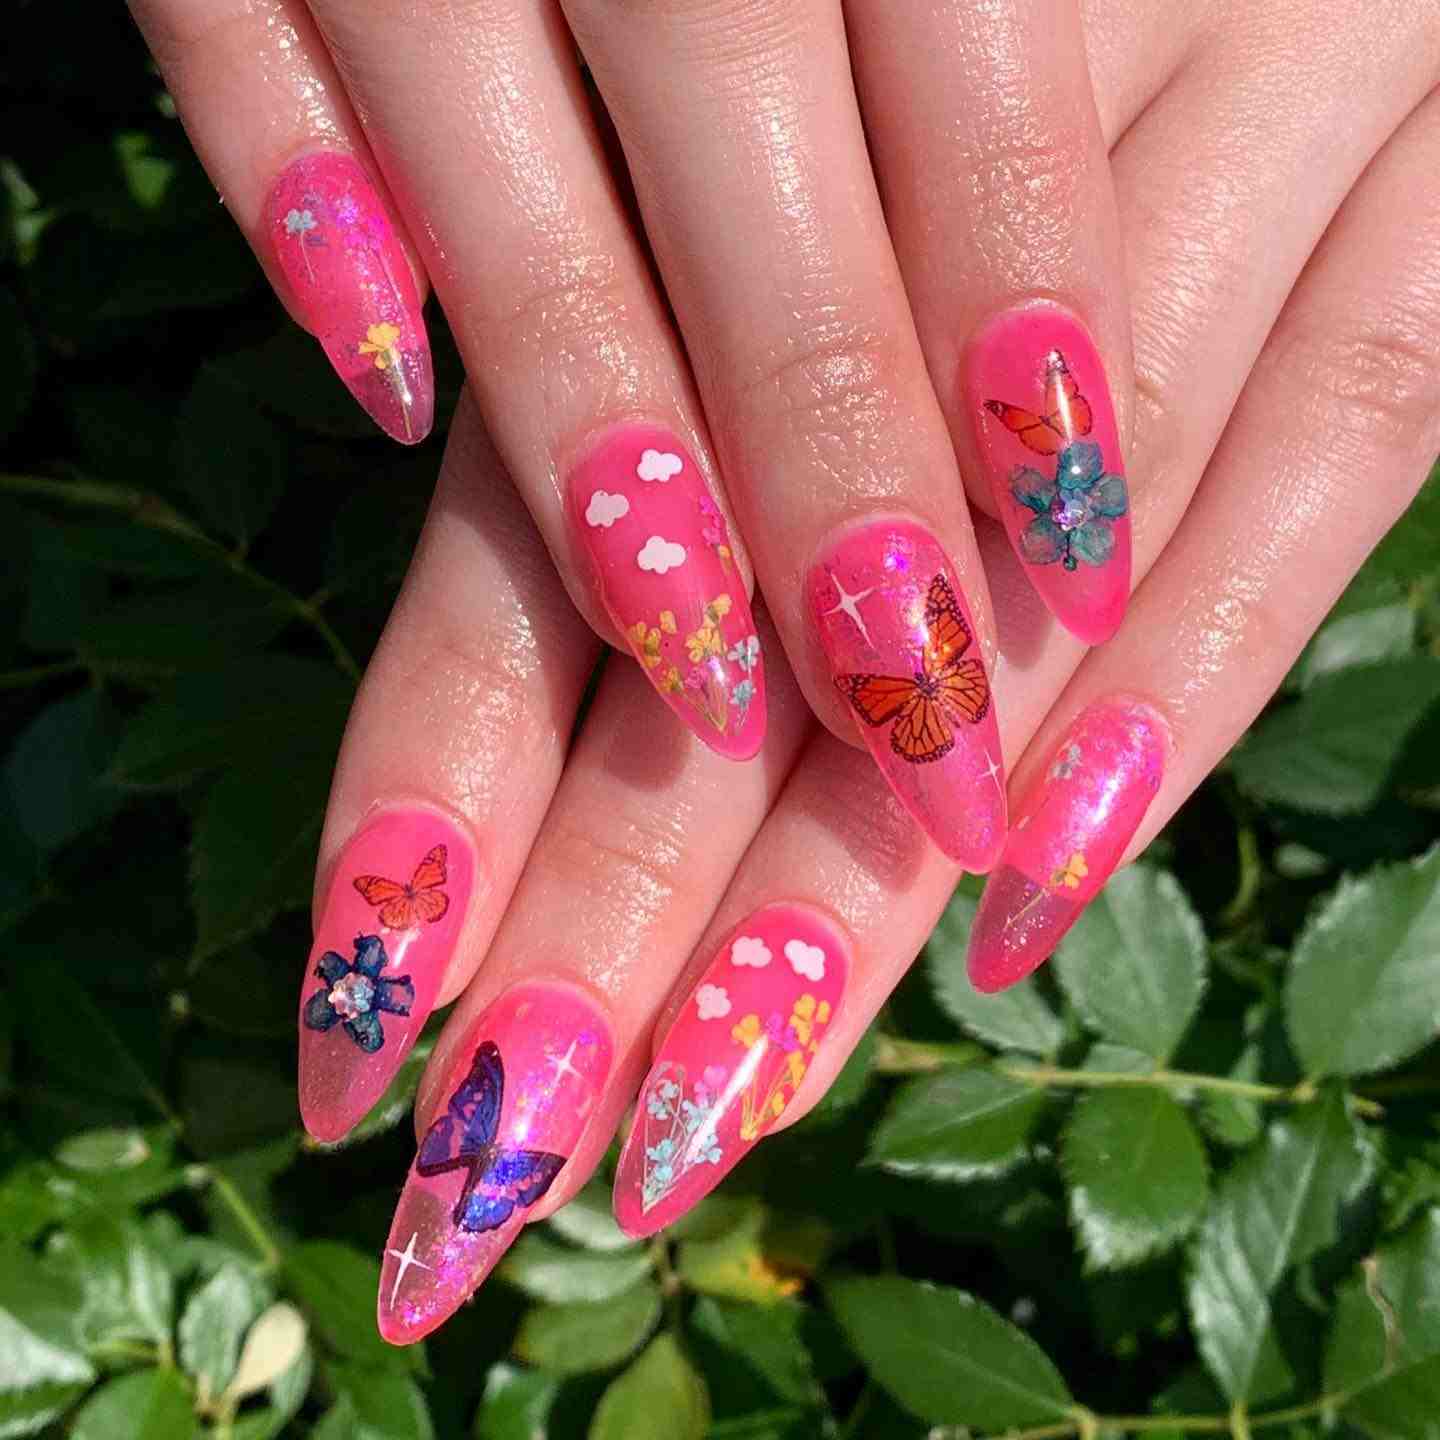 Jelly Nails naglar i mandelform lång neonrosa nagellack nageldesign fjärilsommar